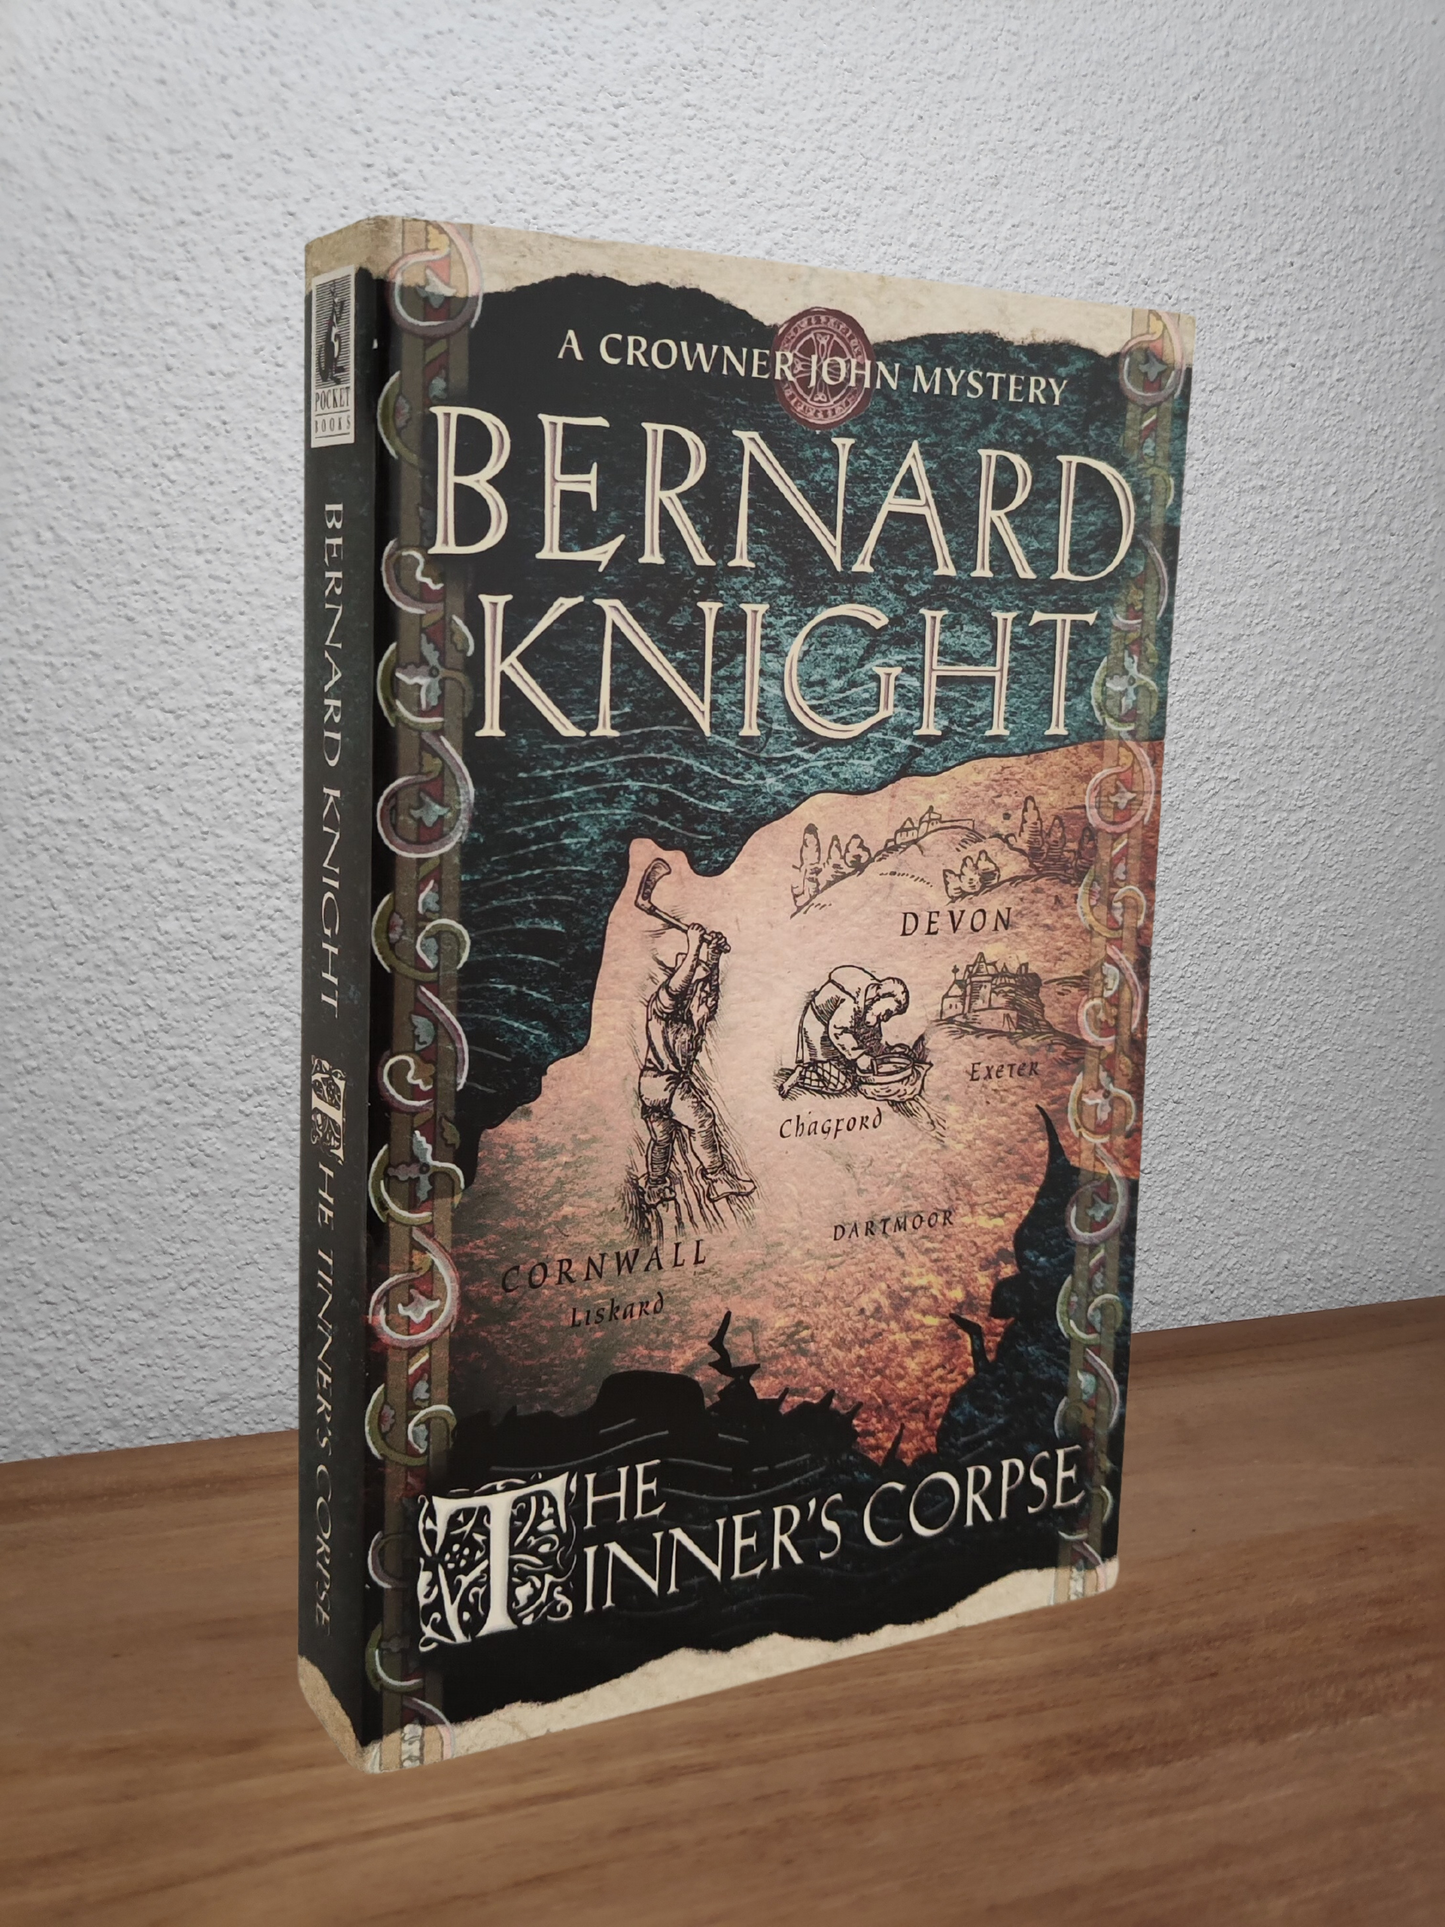 Bernard Knight - The Tinner's Corpse (Crowner John Mystery #5)